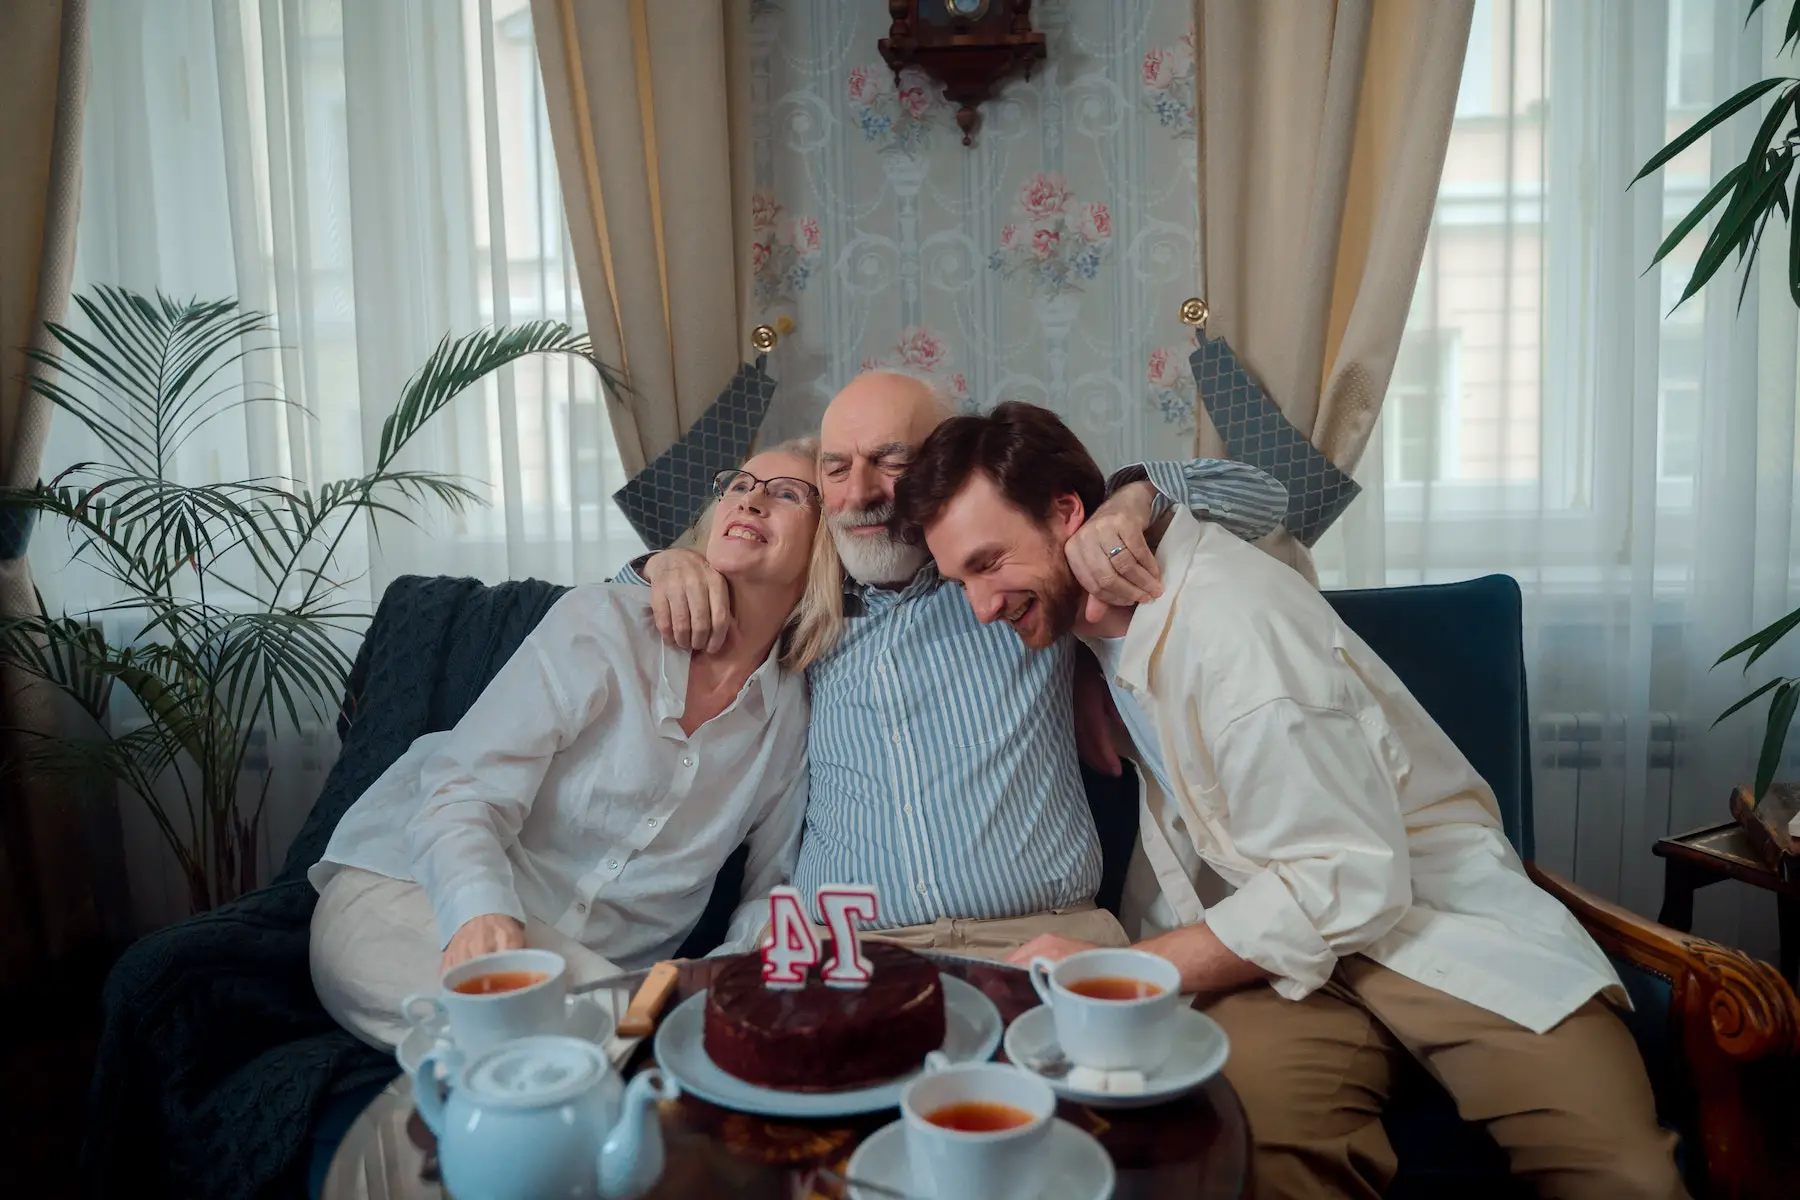 Three people having a small birthday celebration